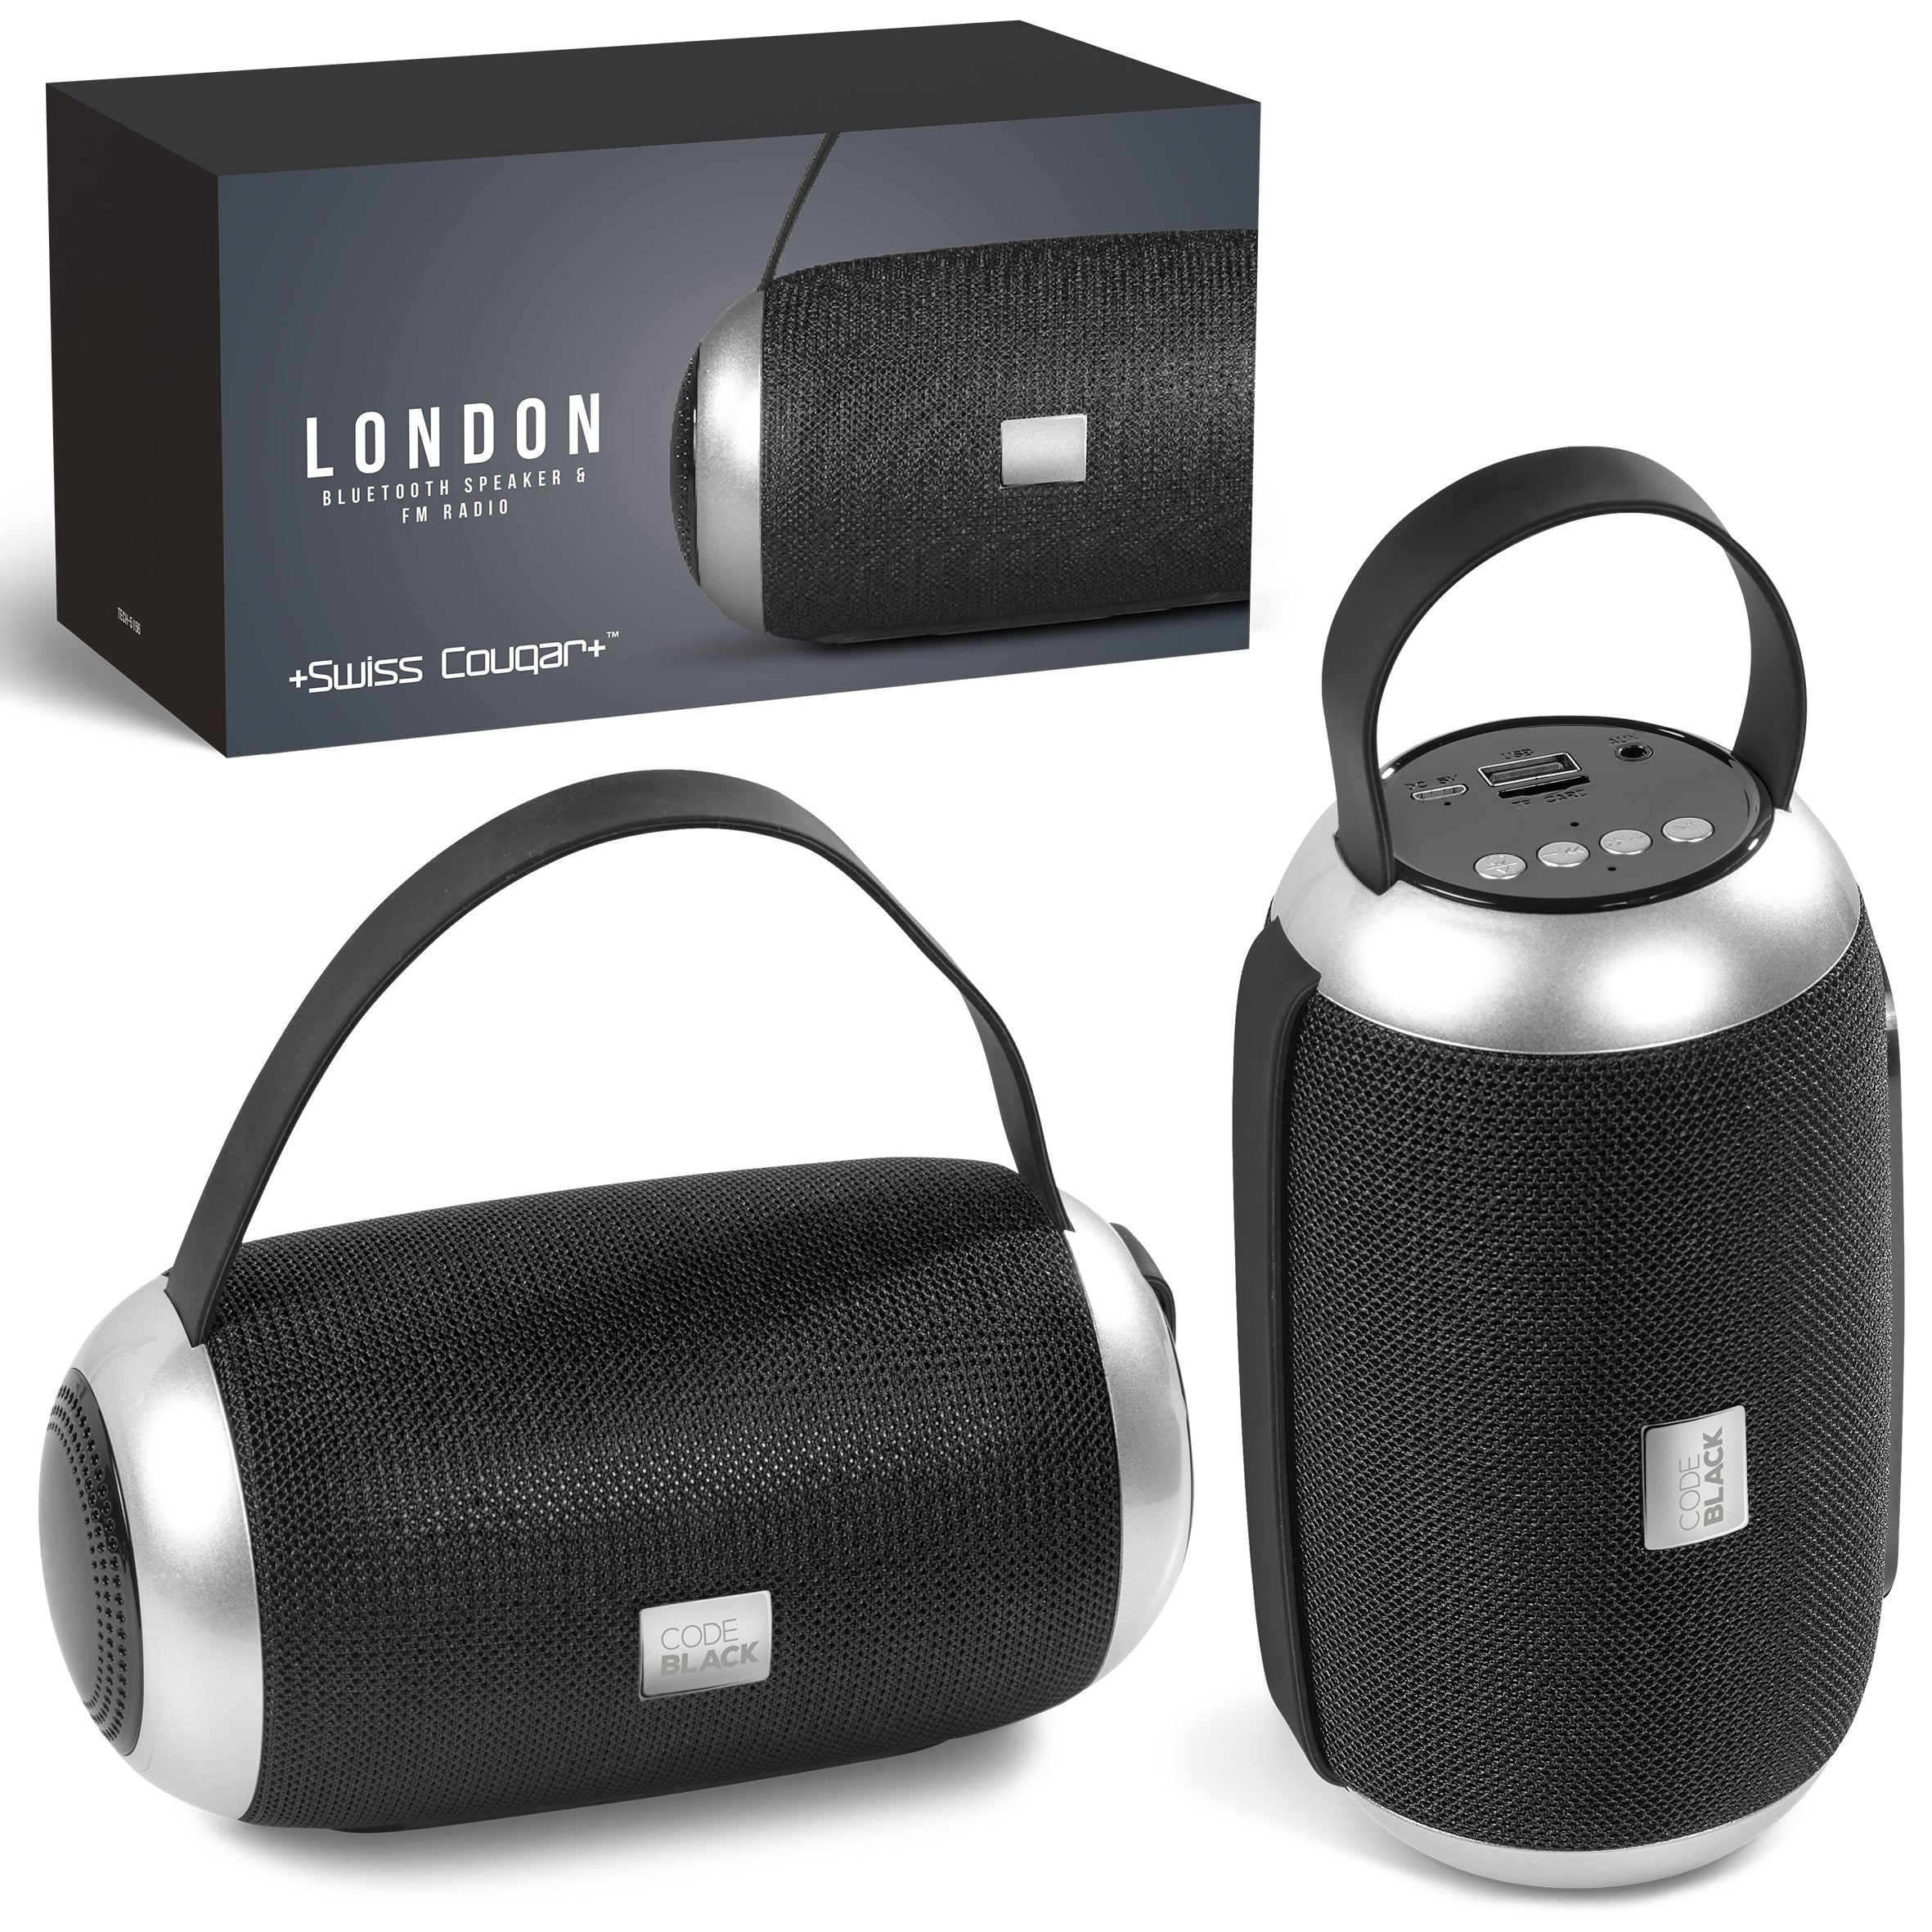 Swiss Cougar London Bluetooth Speaker & Fm Radio-Black-BL